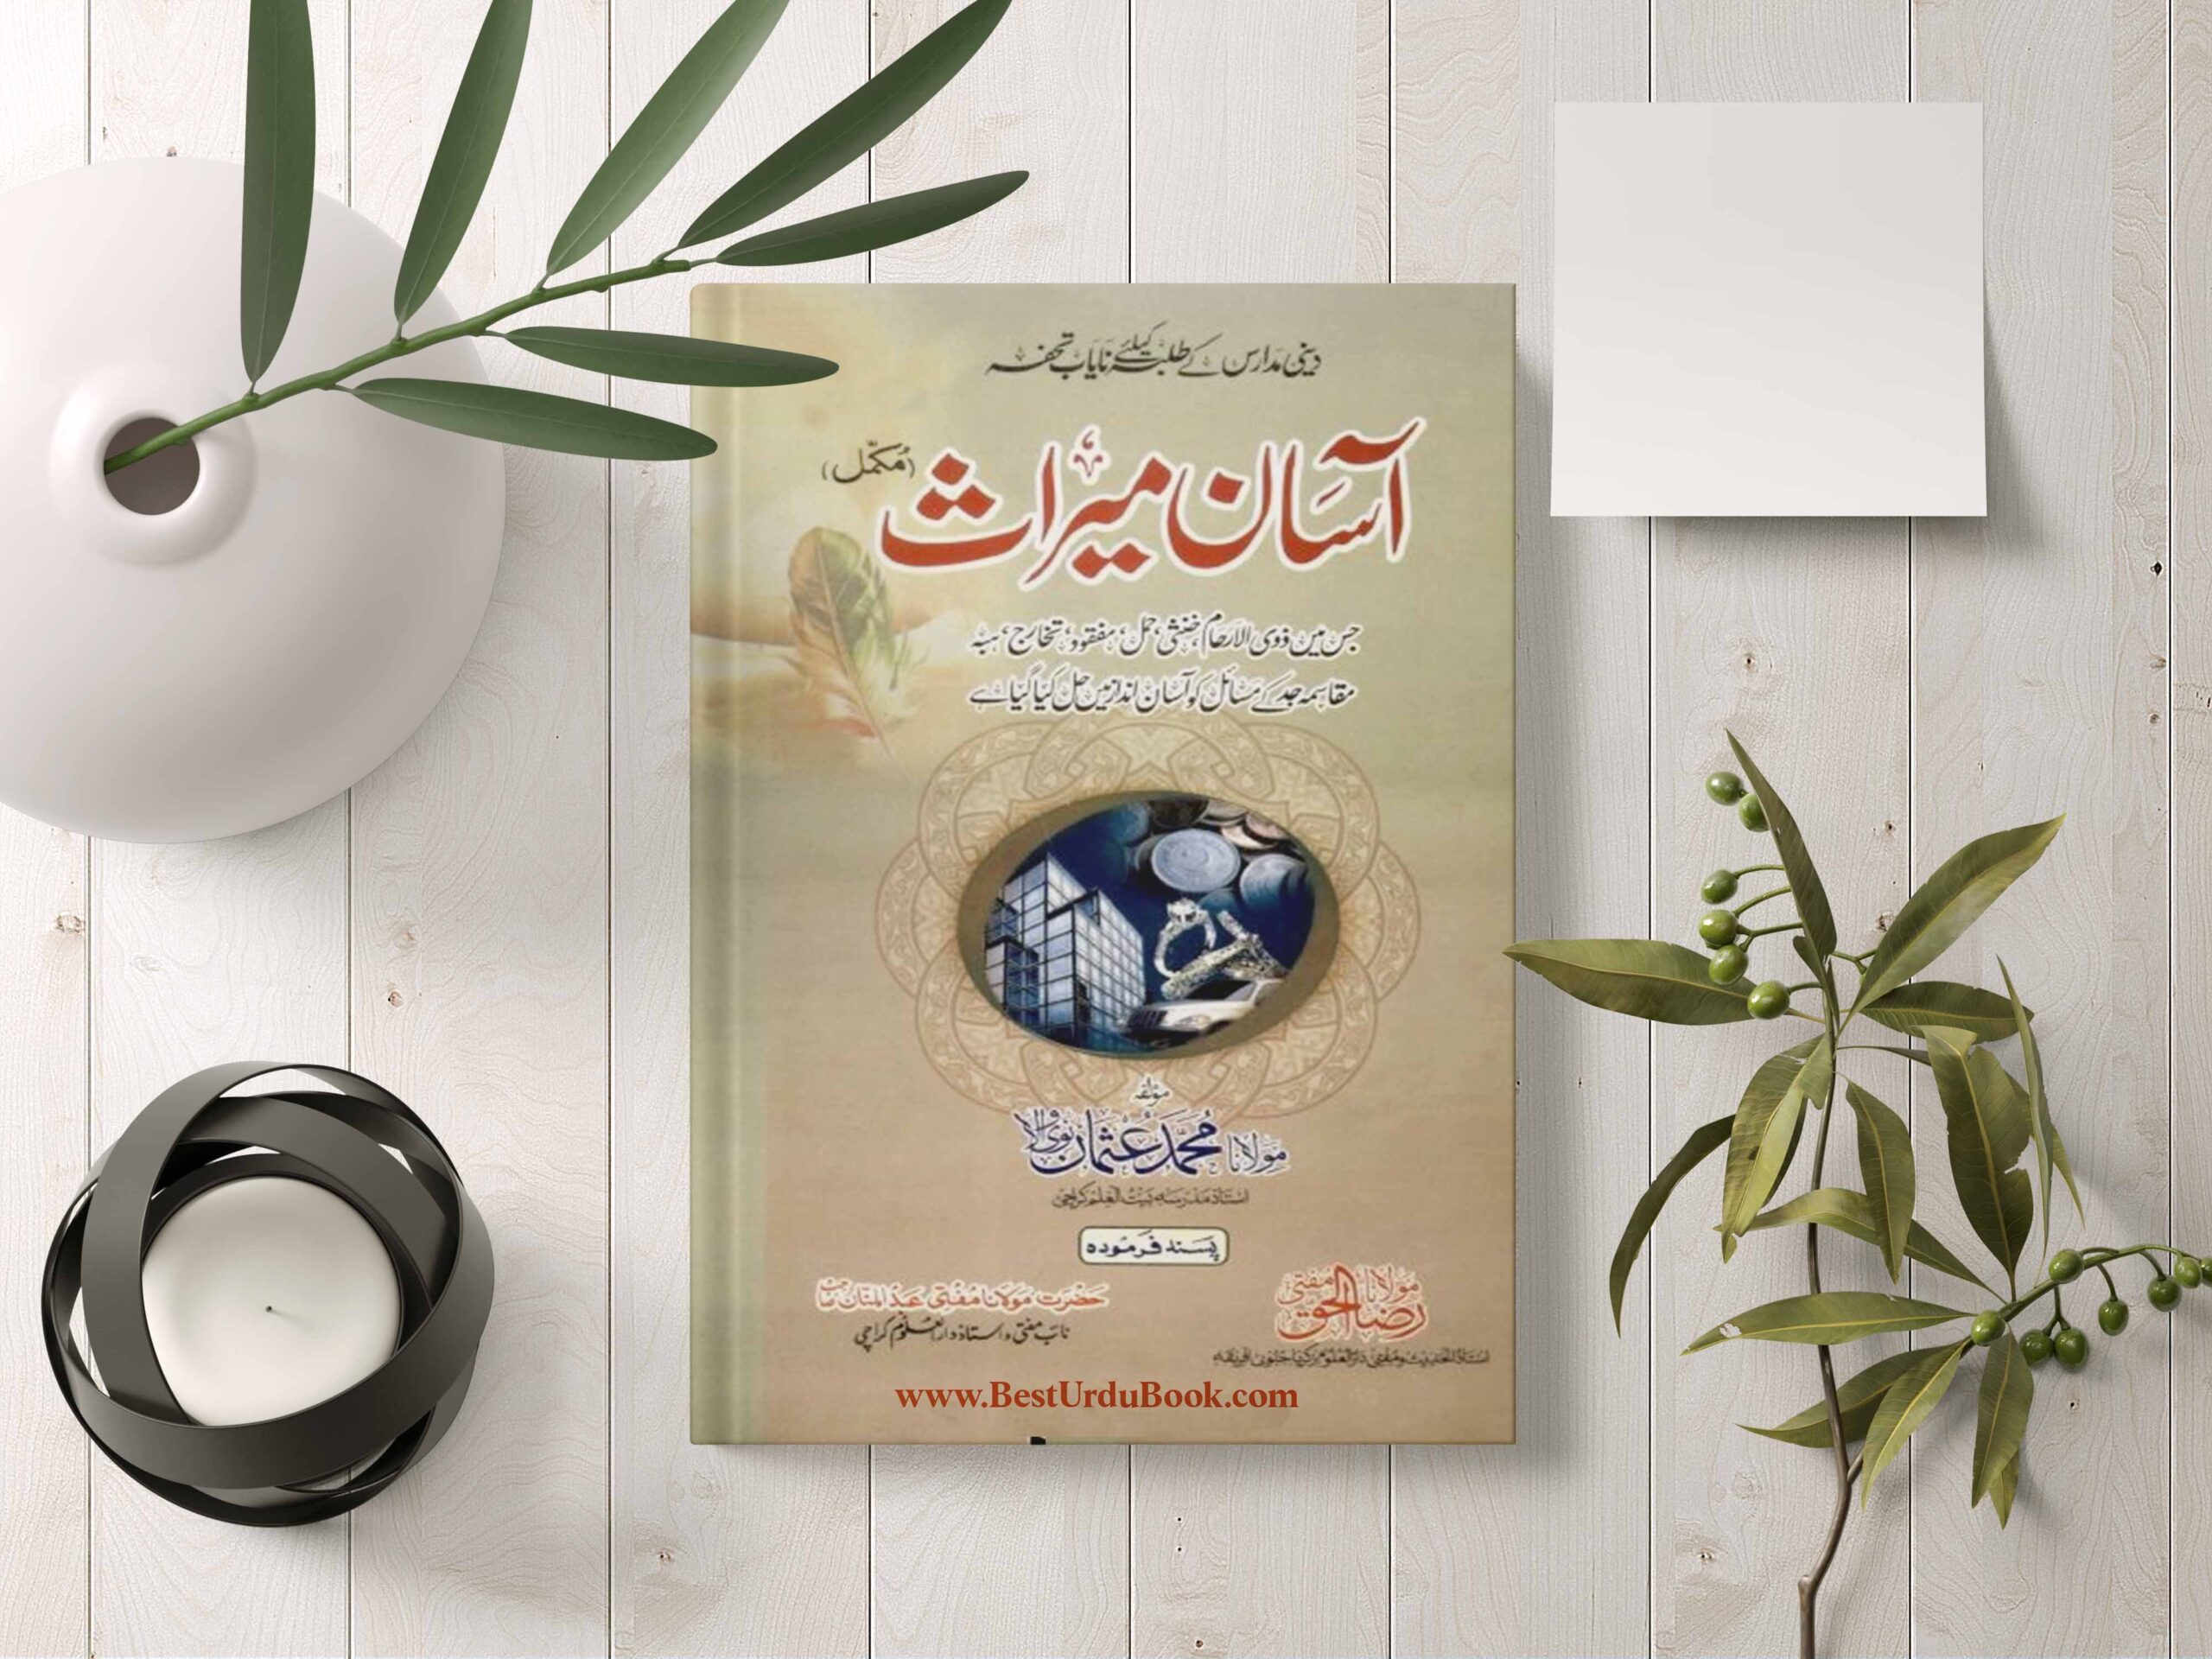 Asaan Miras Book Download In Urdu & pdf format